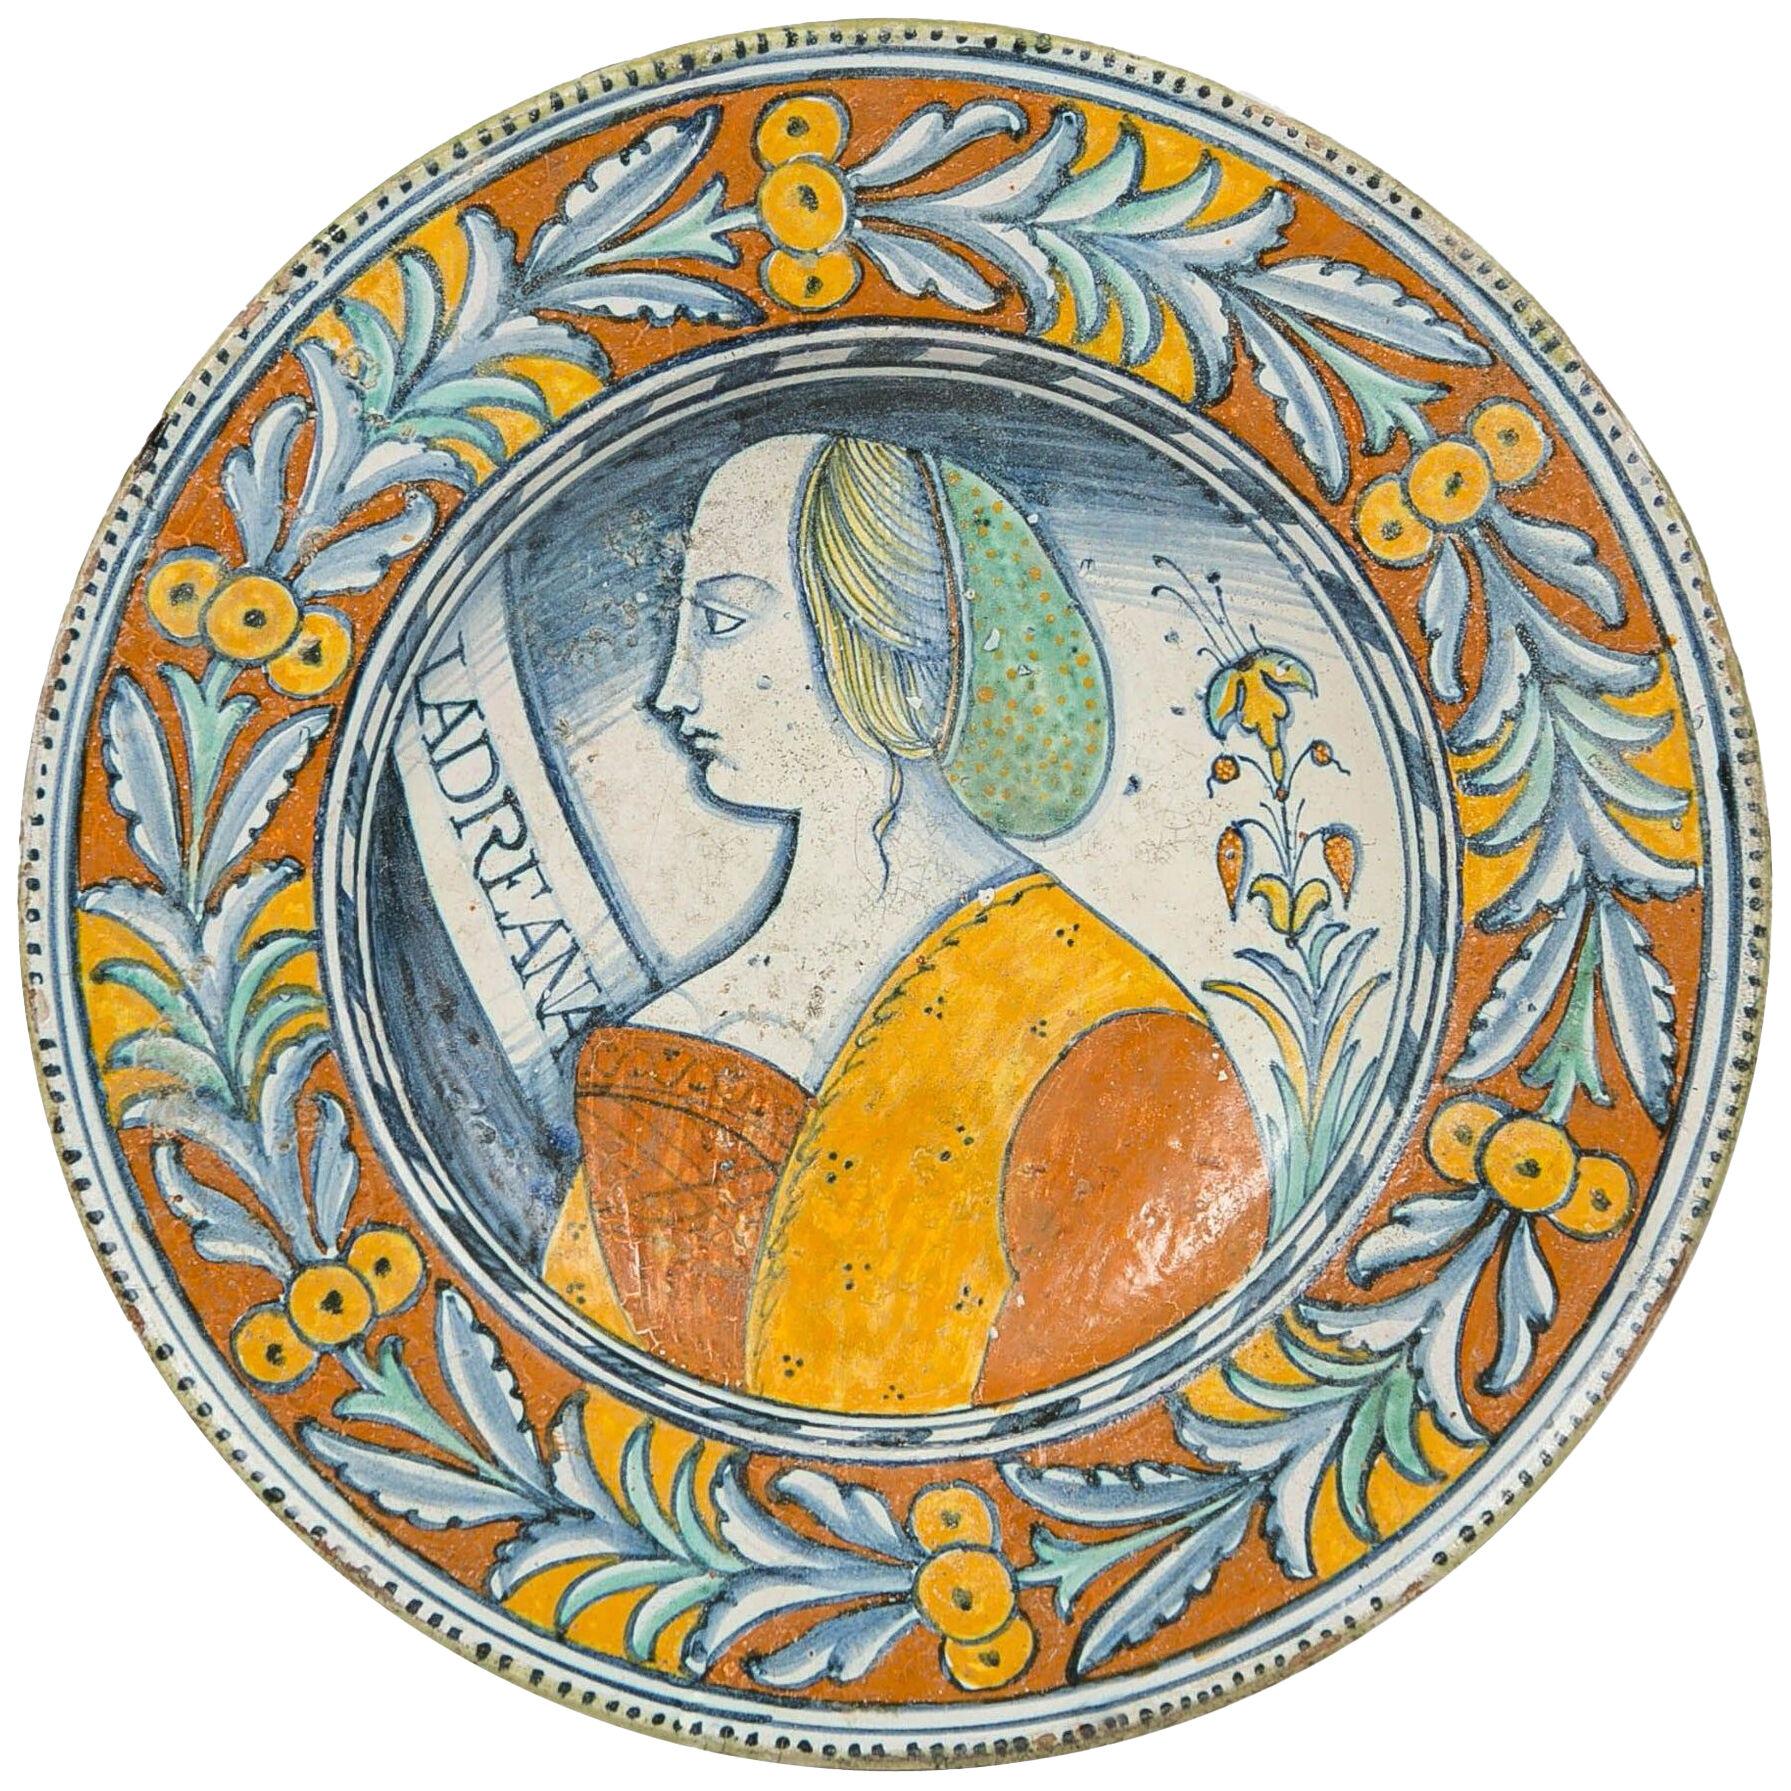 Renaissance Maiolica Portrait Charger Made in Deruta, Italy, circa 1530